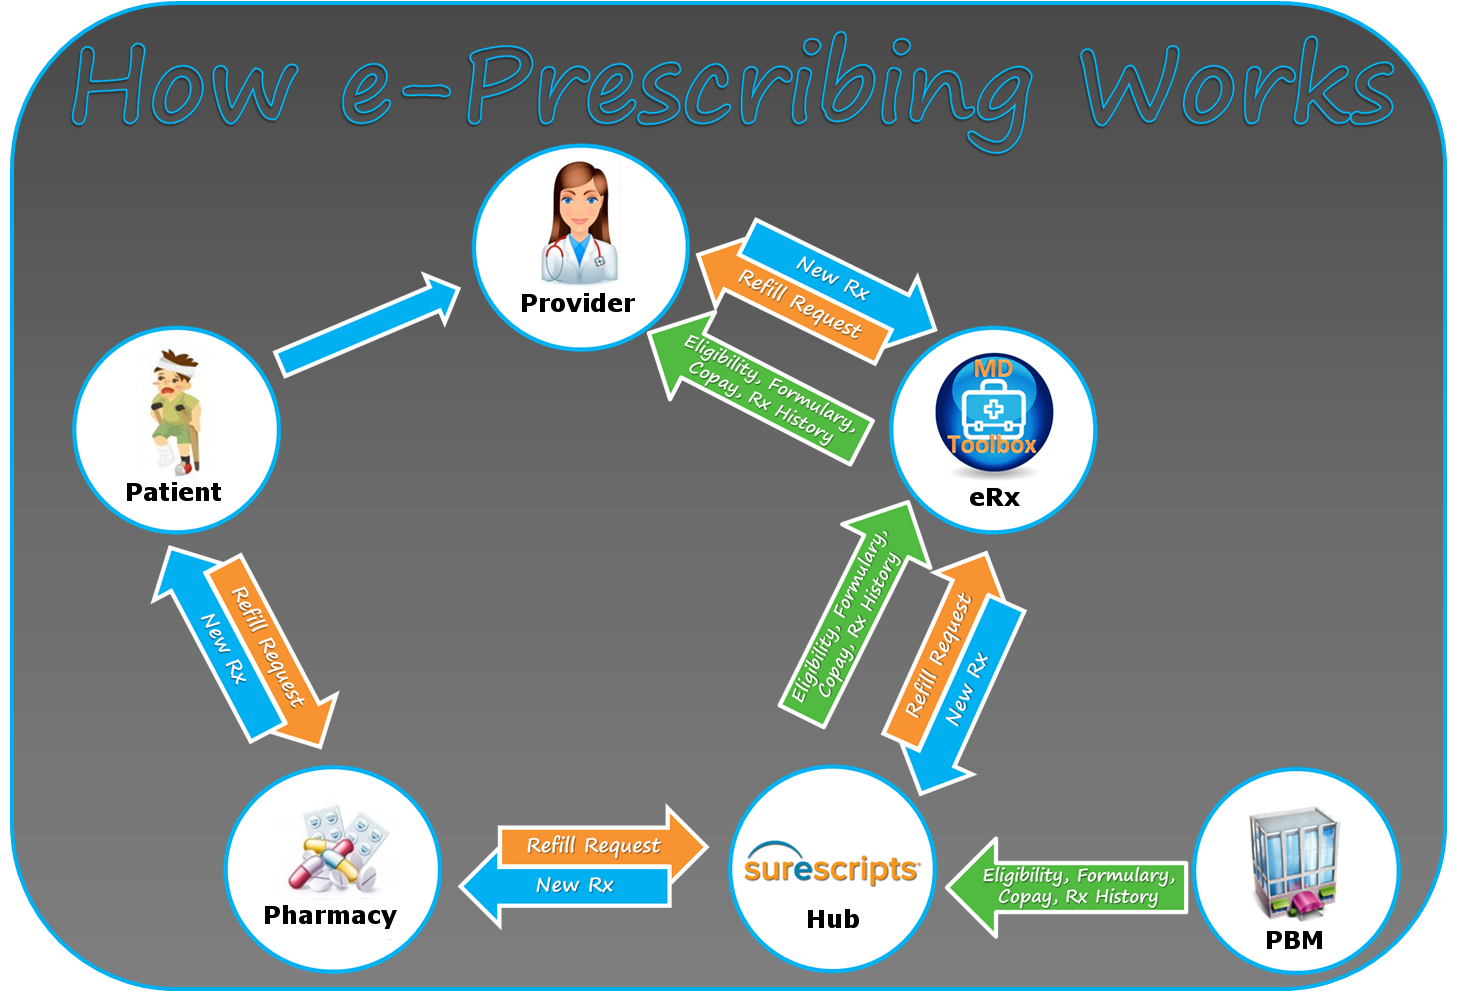 How e-Prescribing Works